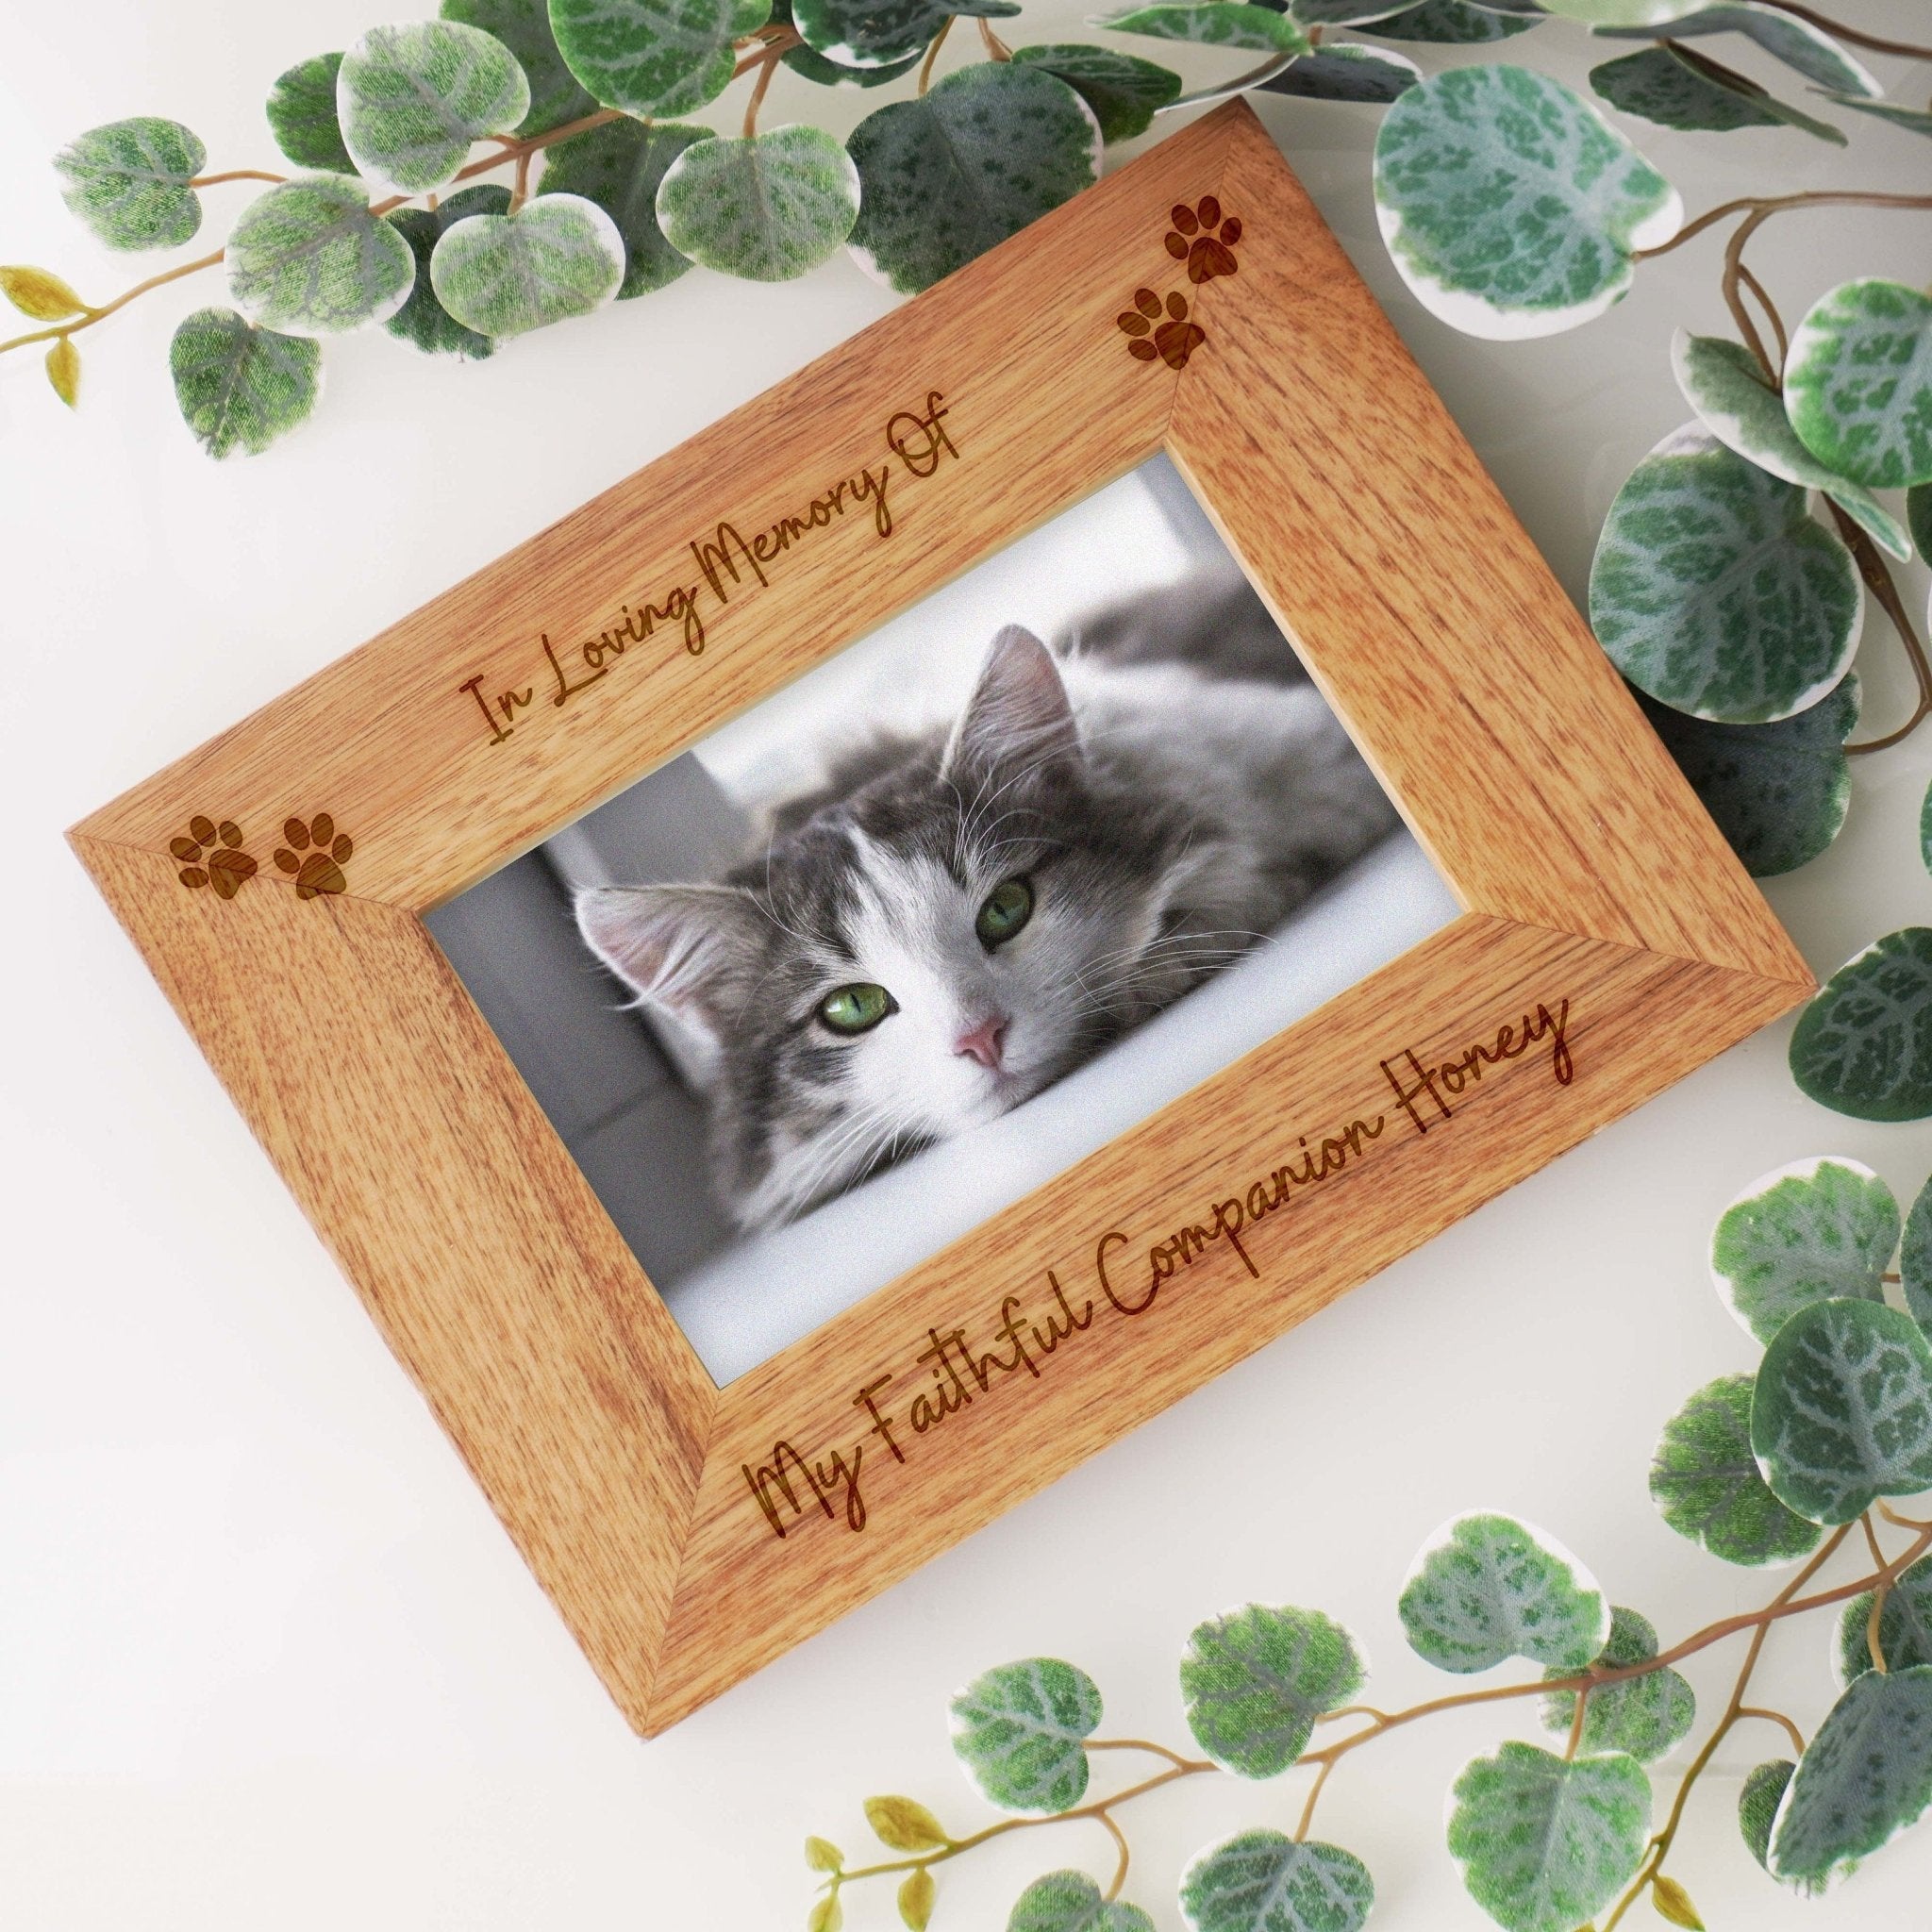 Personalised Pet Memorial Picture Frame